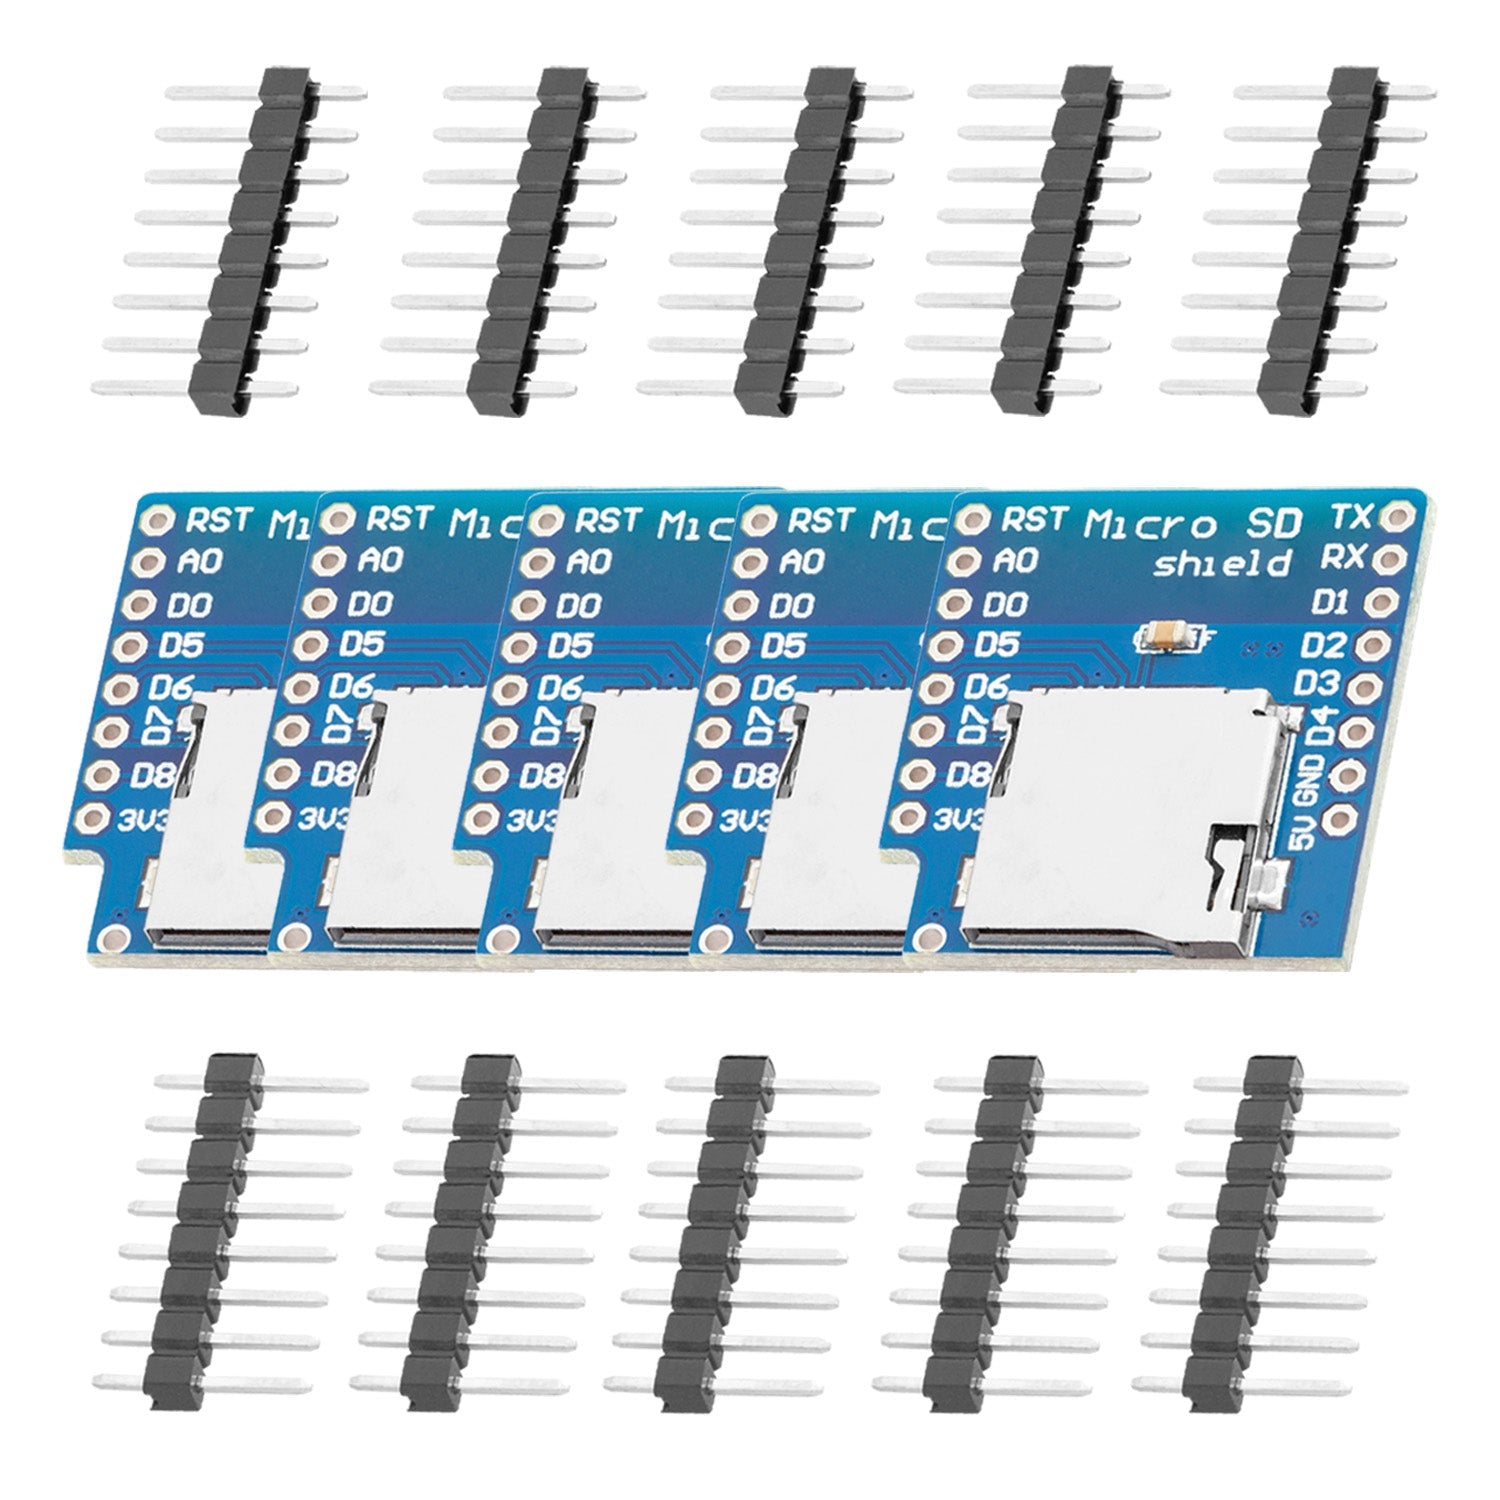 Micro SD Karten D1 Mini Shield Adapter - 8 Pin 3.3V SD Card Lesermodul mit SPI Interface, Kompatibel mit Arduino - AZ-Delivery